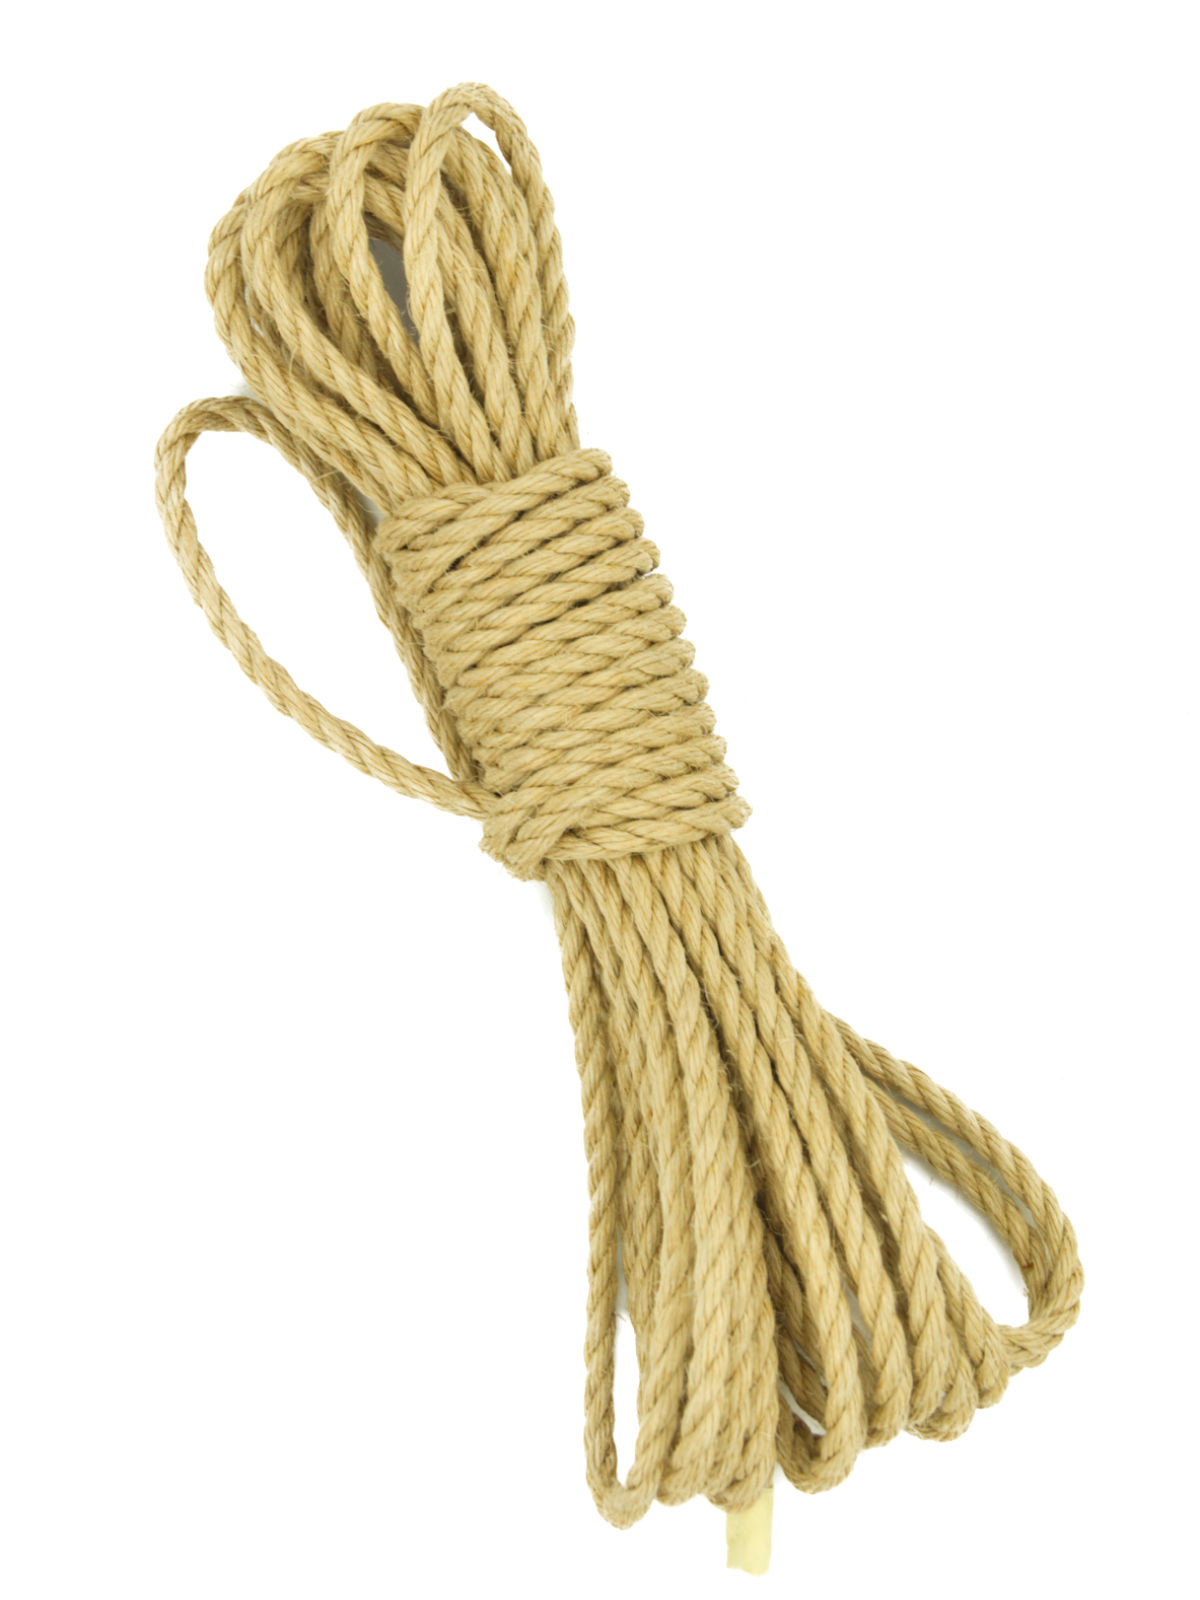 ø 4.5mm RAW Jouyoku jute rope for Shibari, Kinbaku bondage, various lengths 